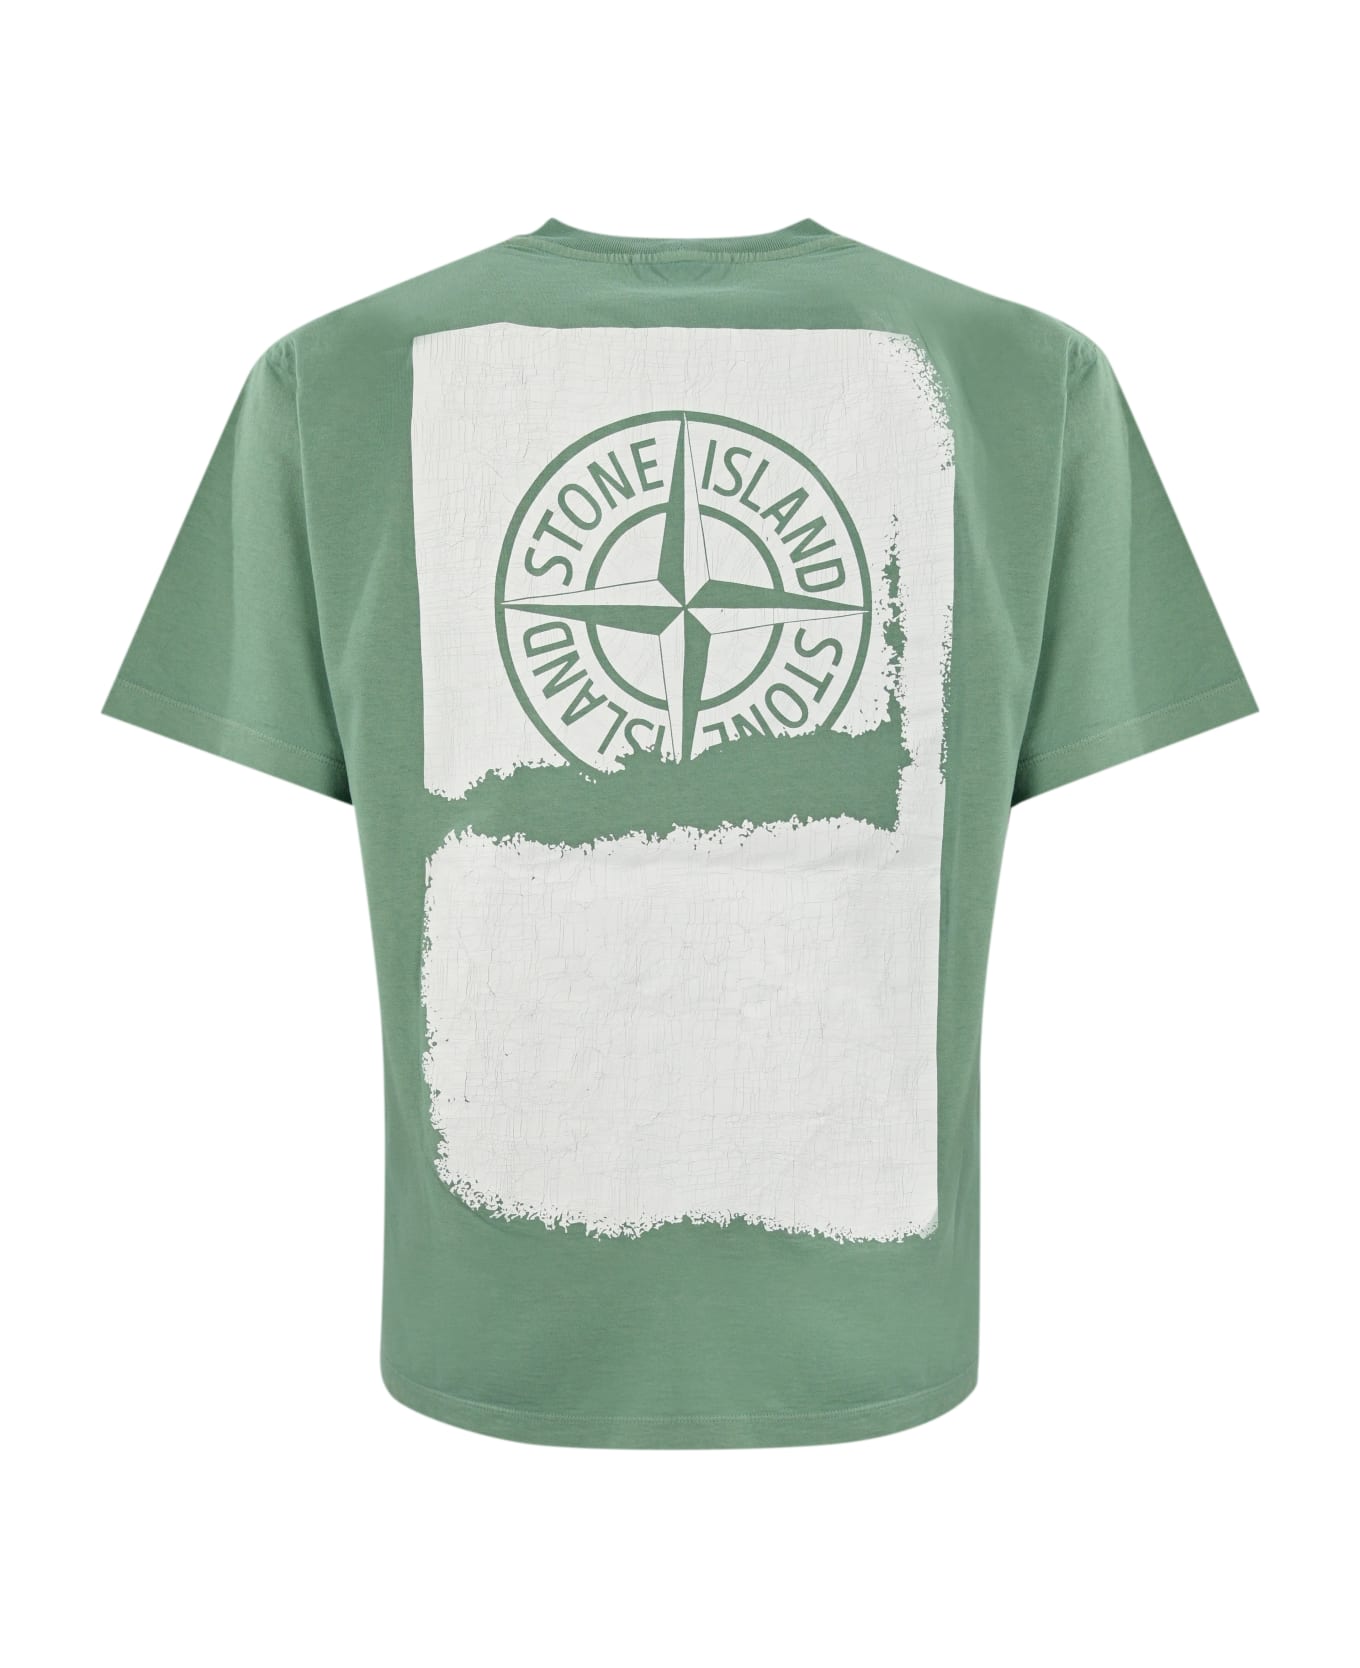 Stone Island T-shirt With Logo Print - Light green